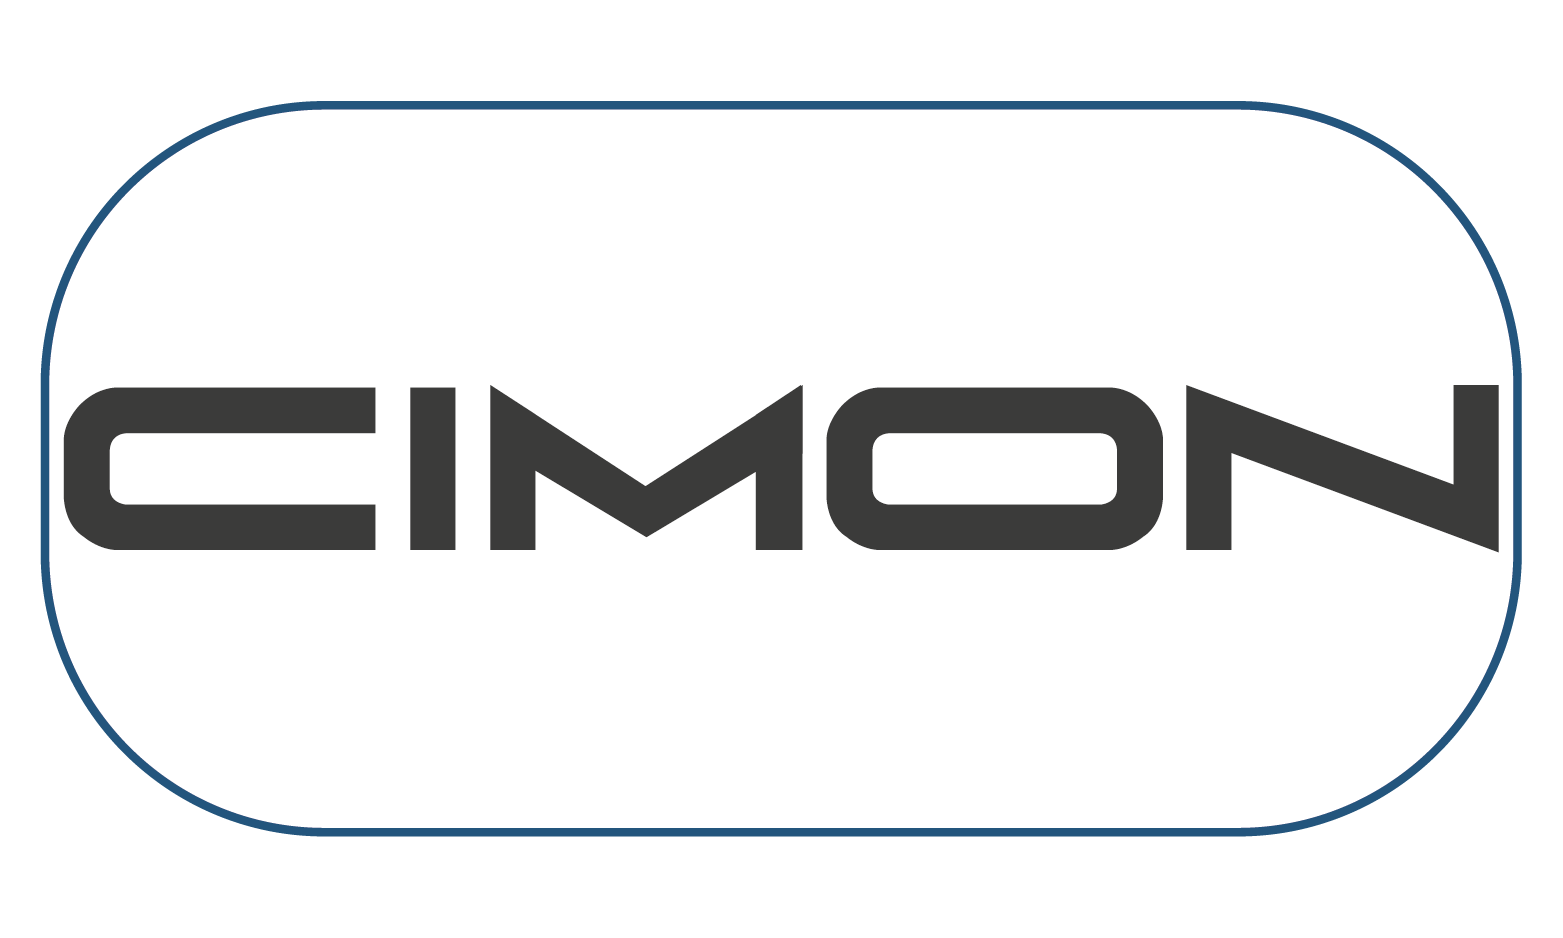 CIMON Automation procesos datos 